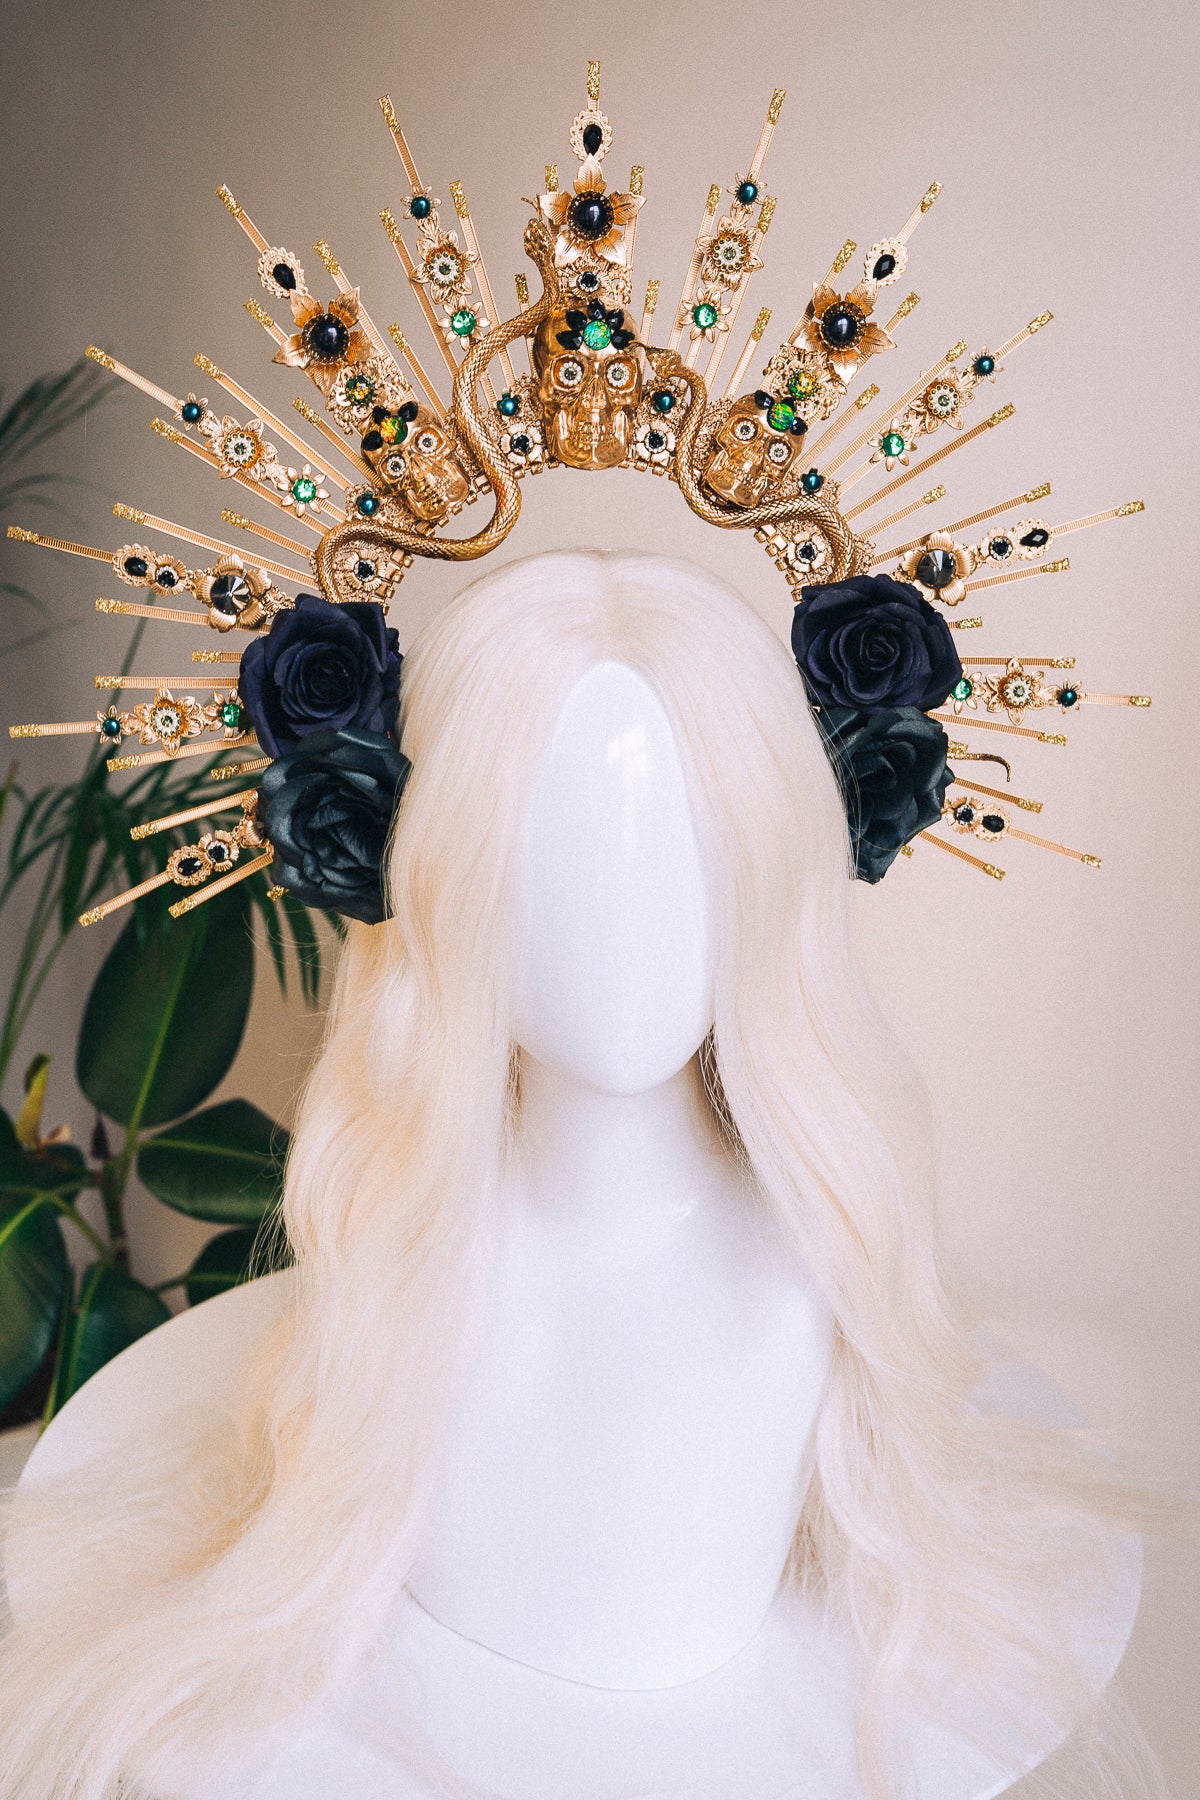 Load image into Gallery viewer, Hallowen Sugar Skull Crown
